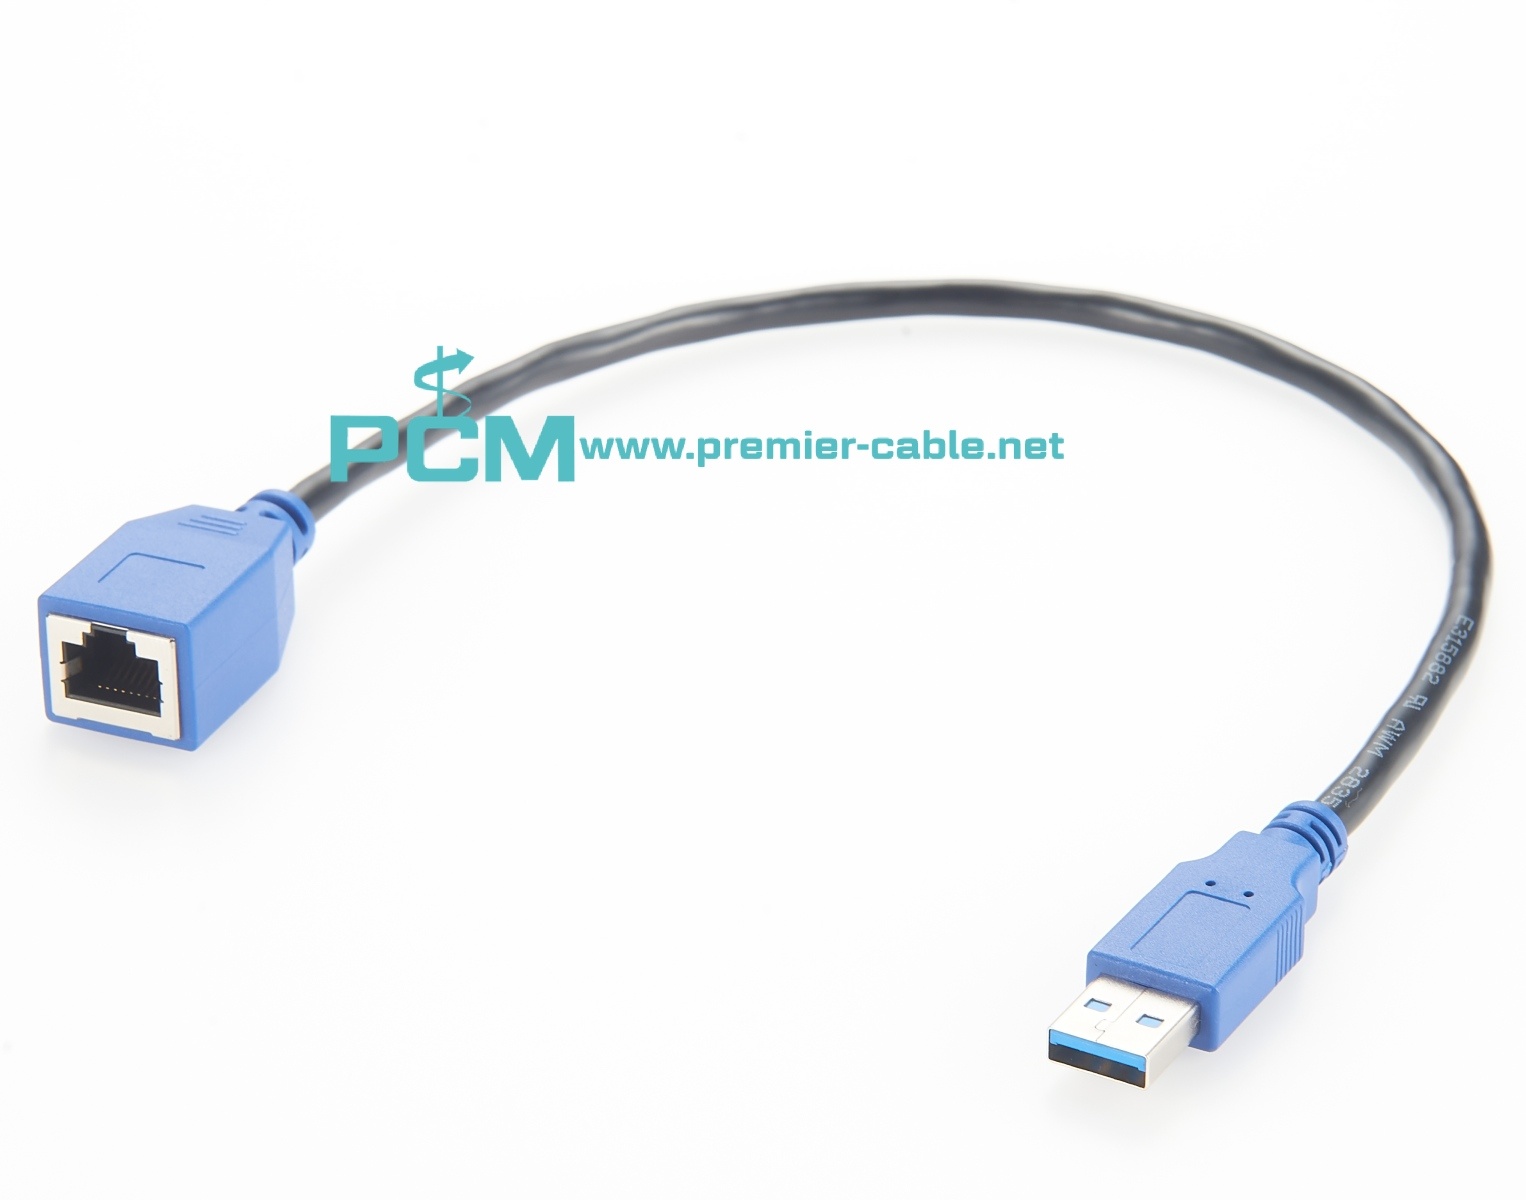 Premier Cable BBU 3900 RRU LMA Cat5 Network Cable